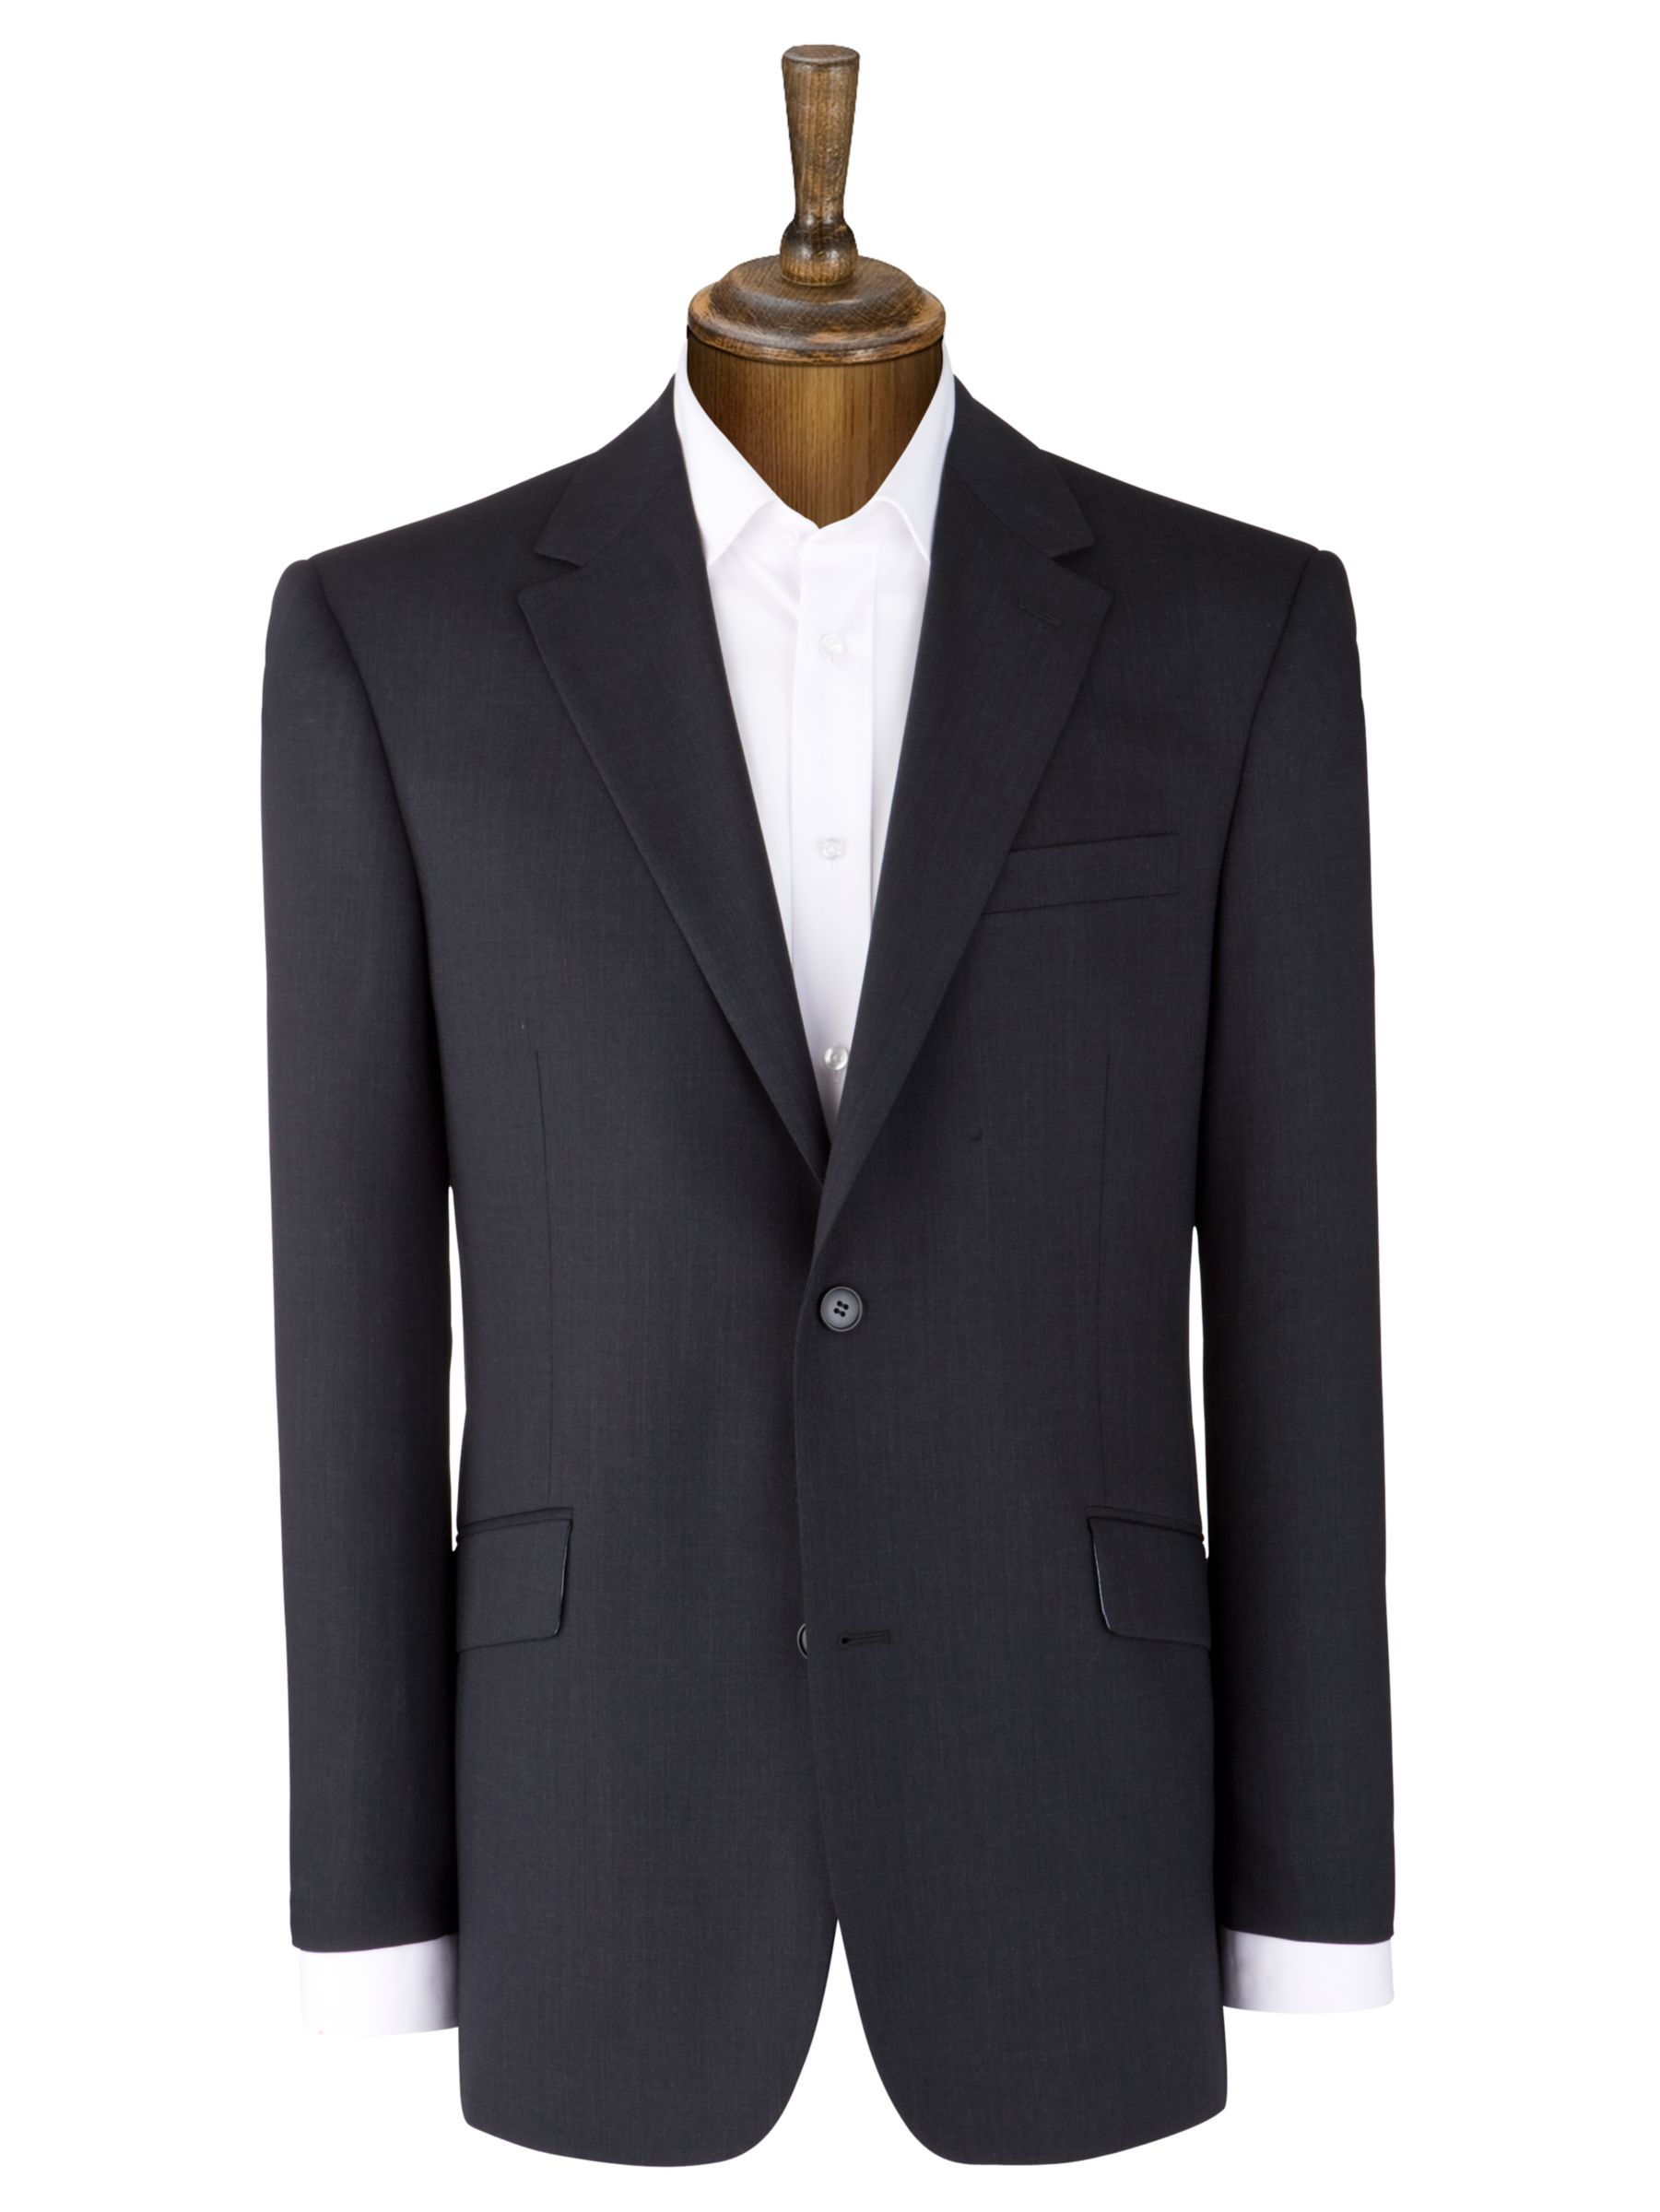 Daniel Hechter Organic Wool Suit Jacket, Charcoal at JohnLewis